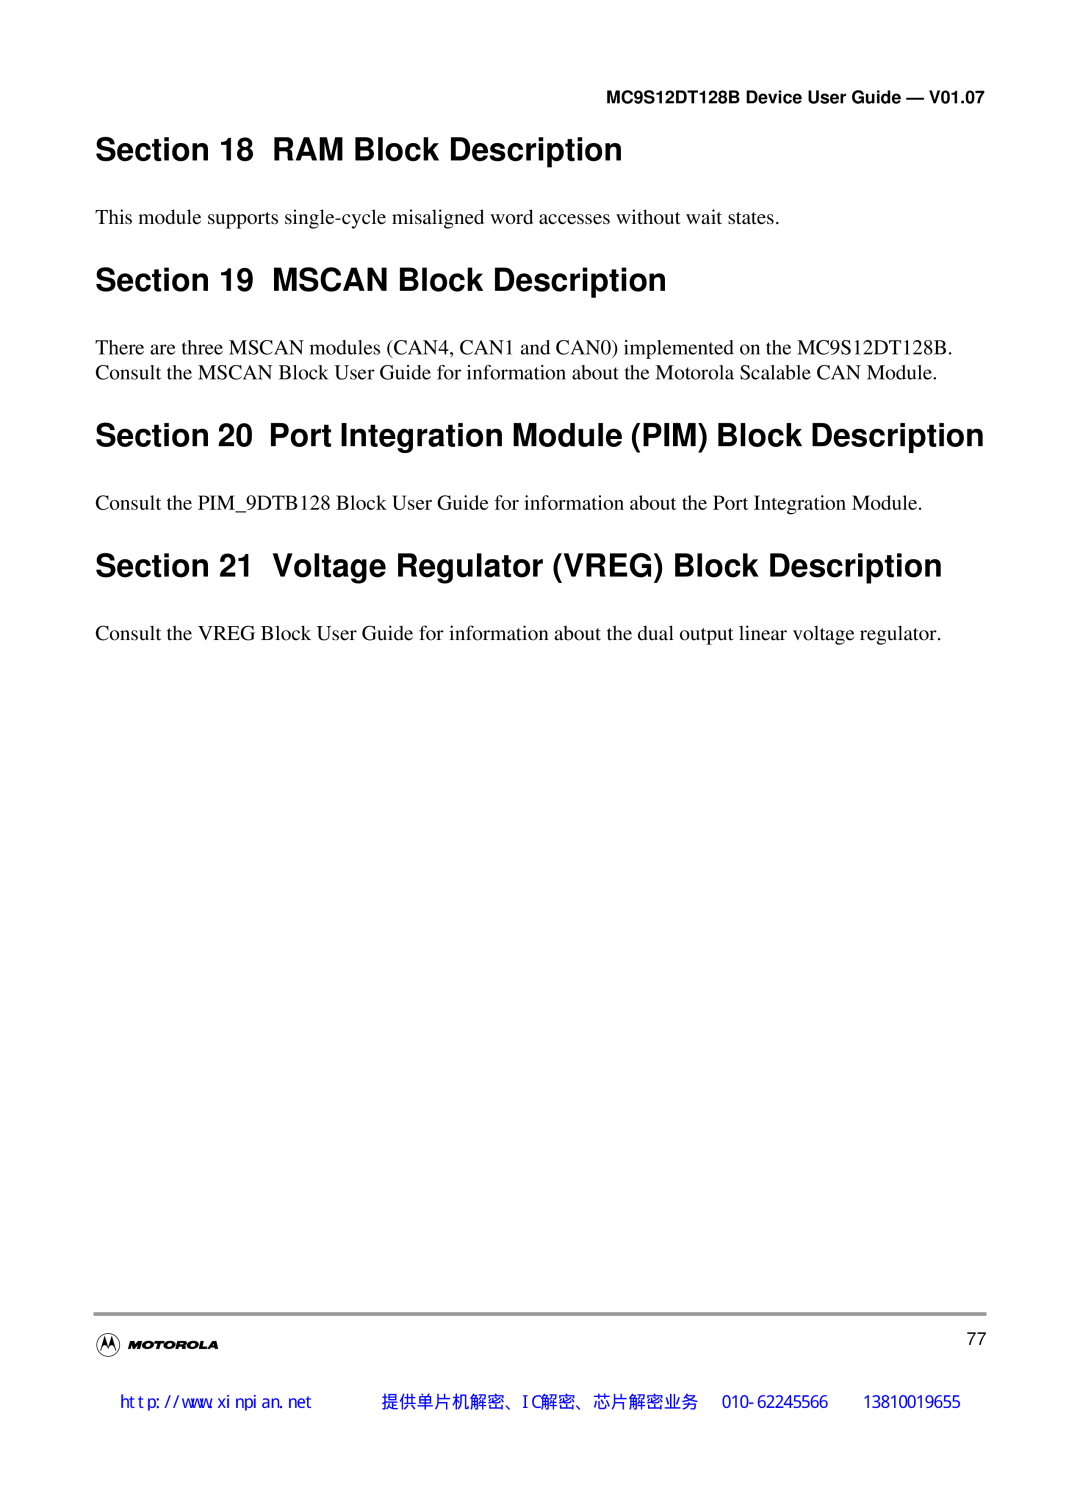 Motorola MC9S12DB128B manual RAM Block Description, MSCAN Block Description, Port Integration Module PIM Block Description 